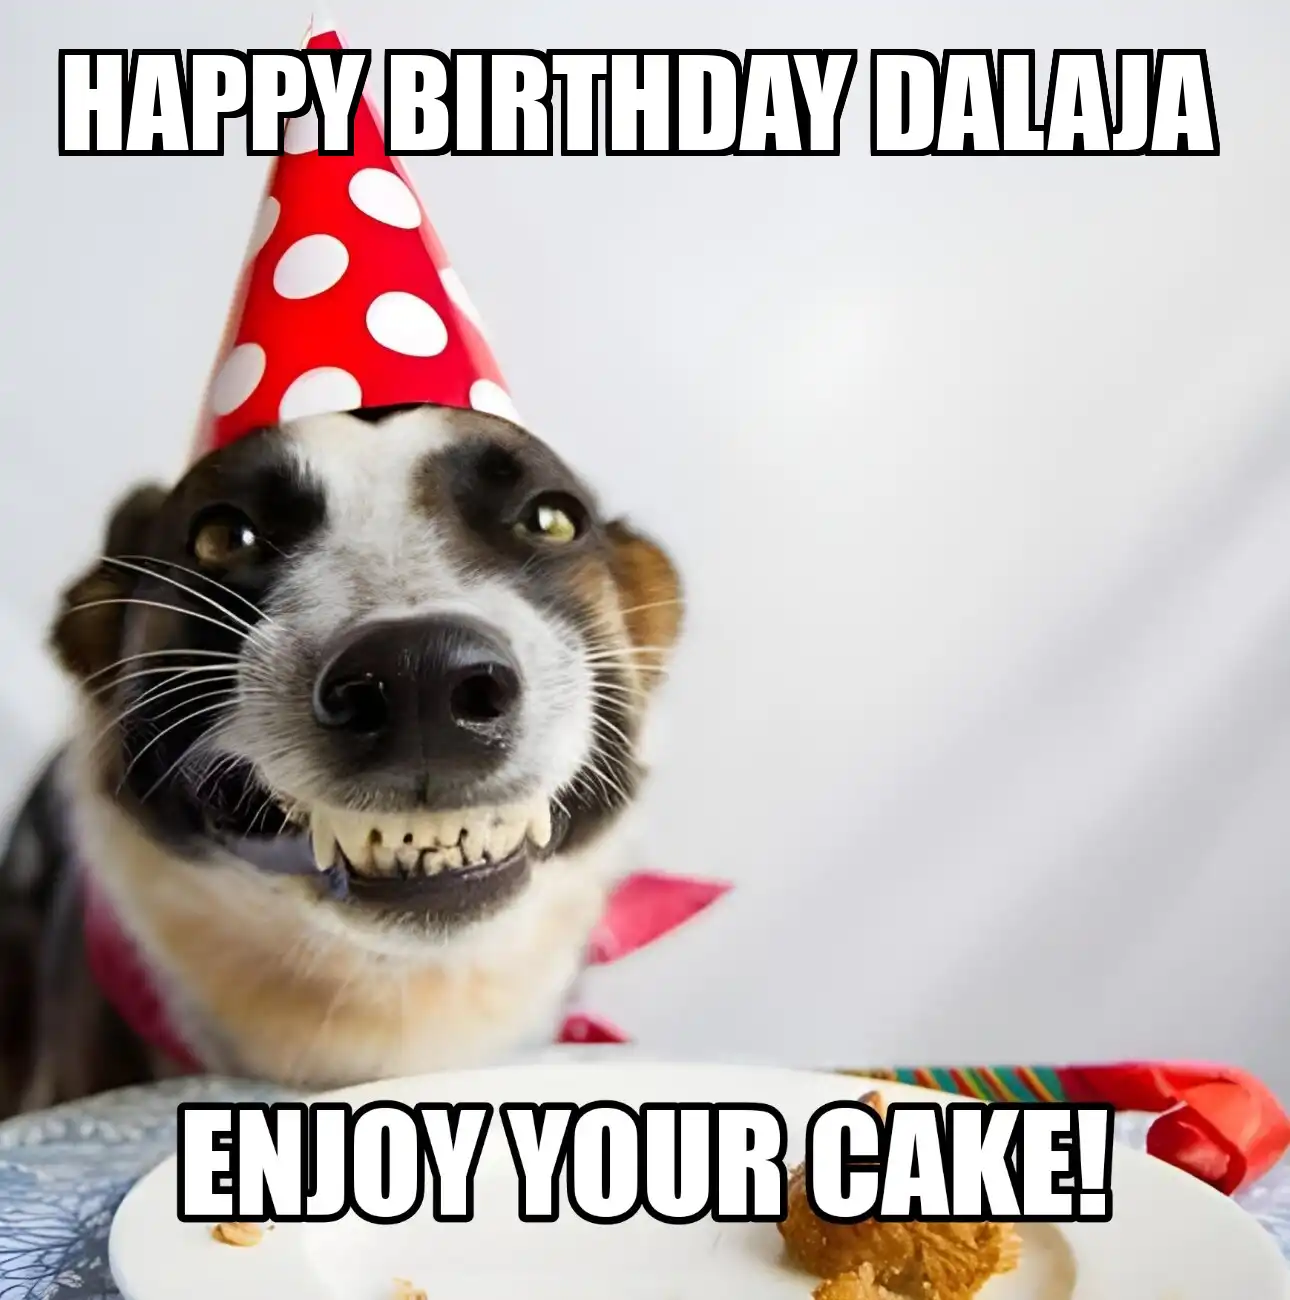 Happy Birthday Dalaja Enjoy Your Cake Dog Meme